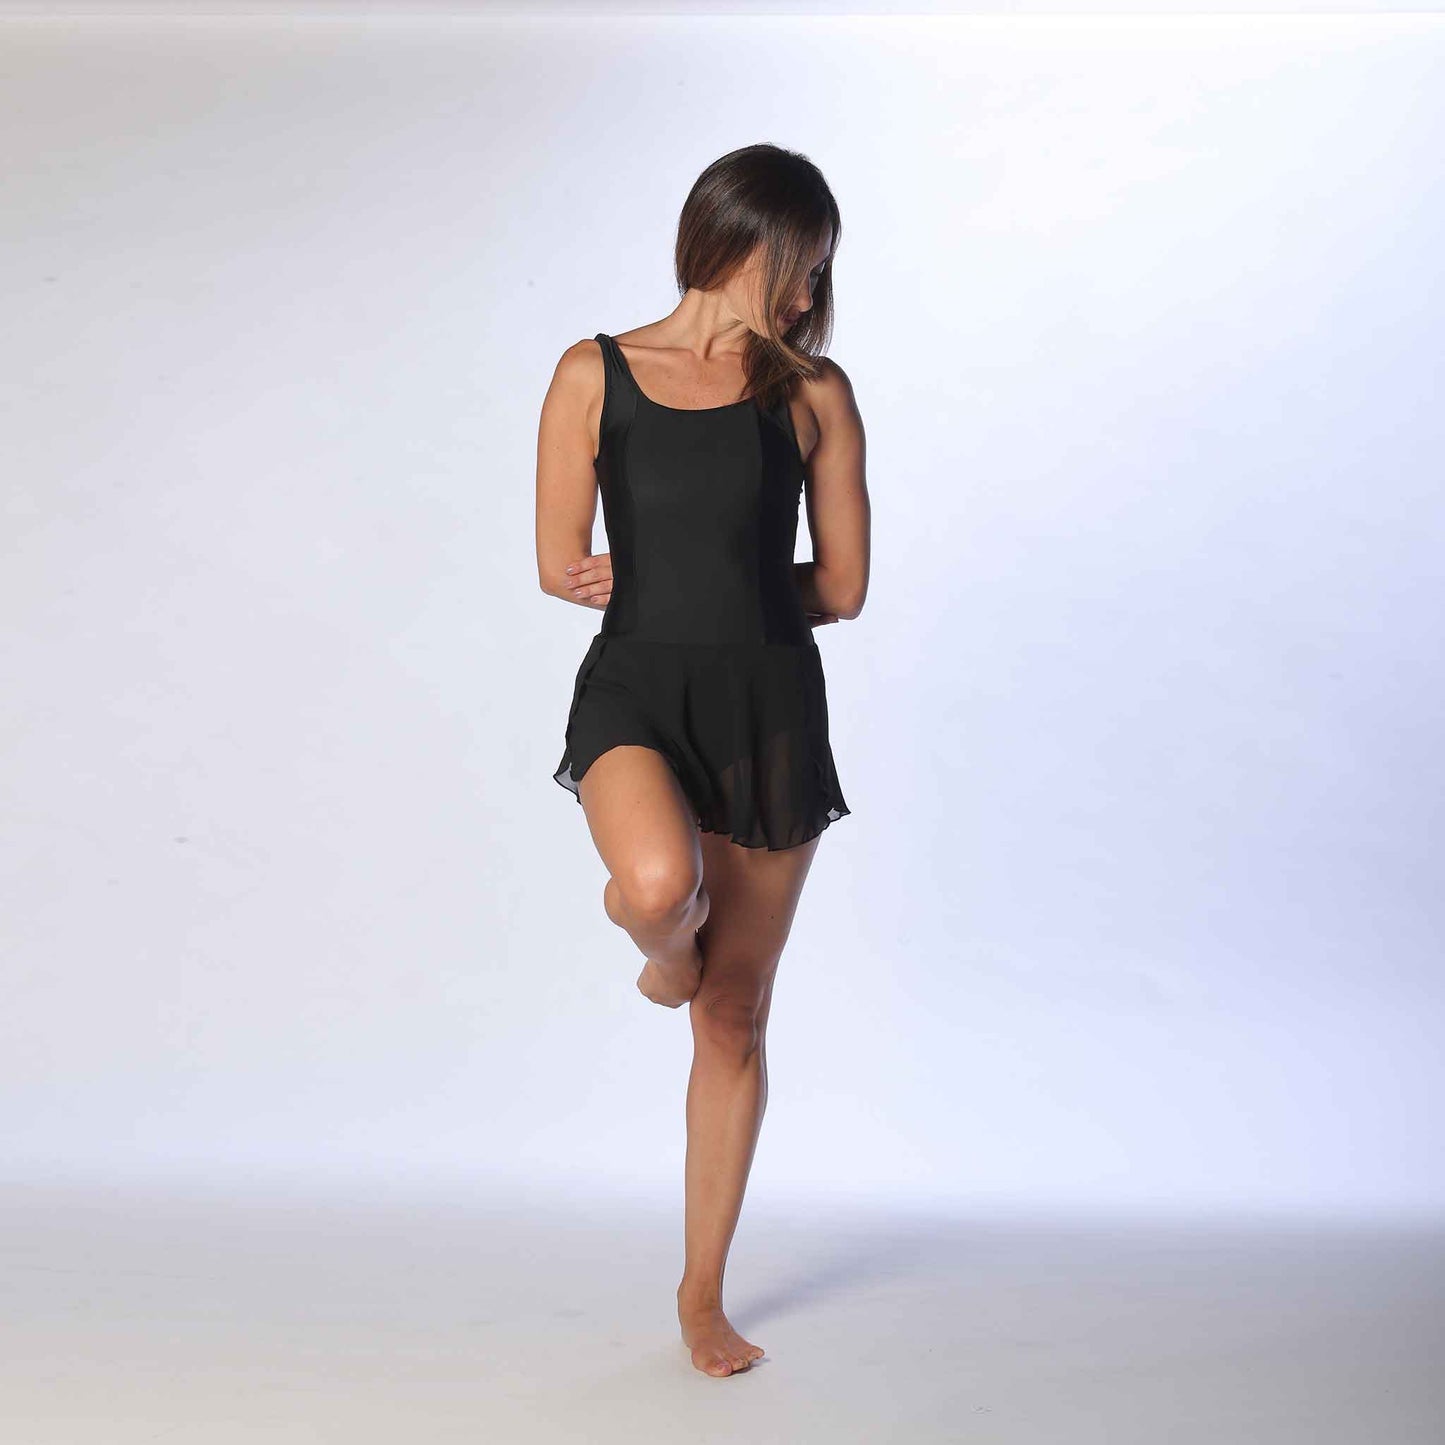 women ballet dress black